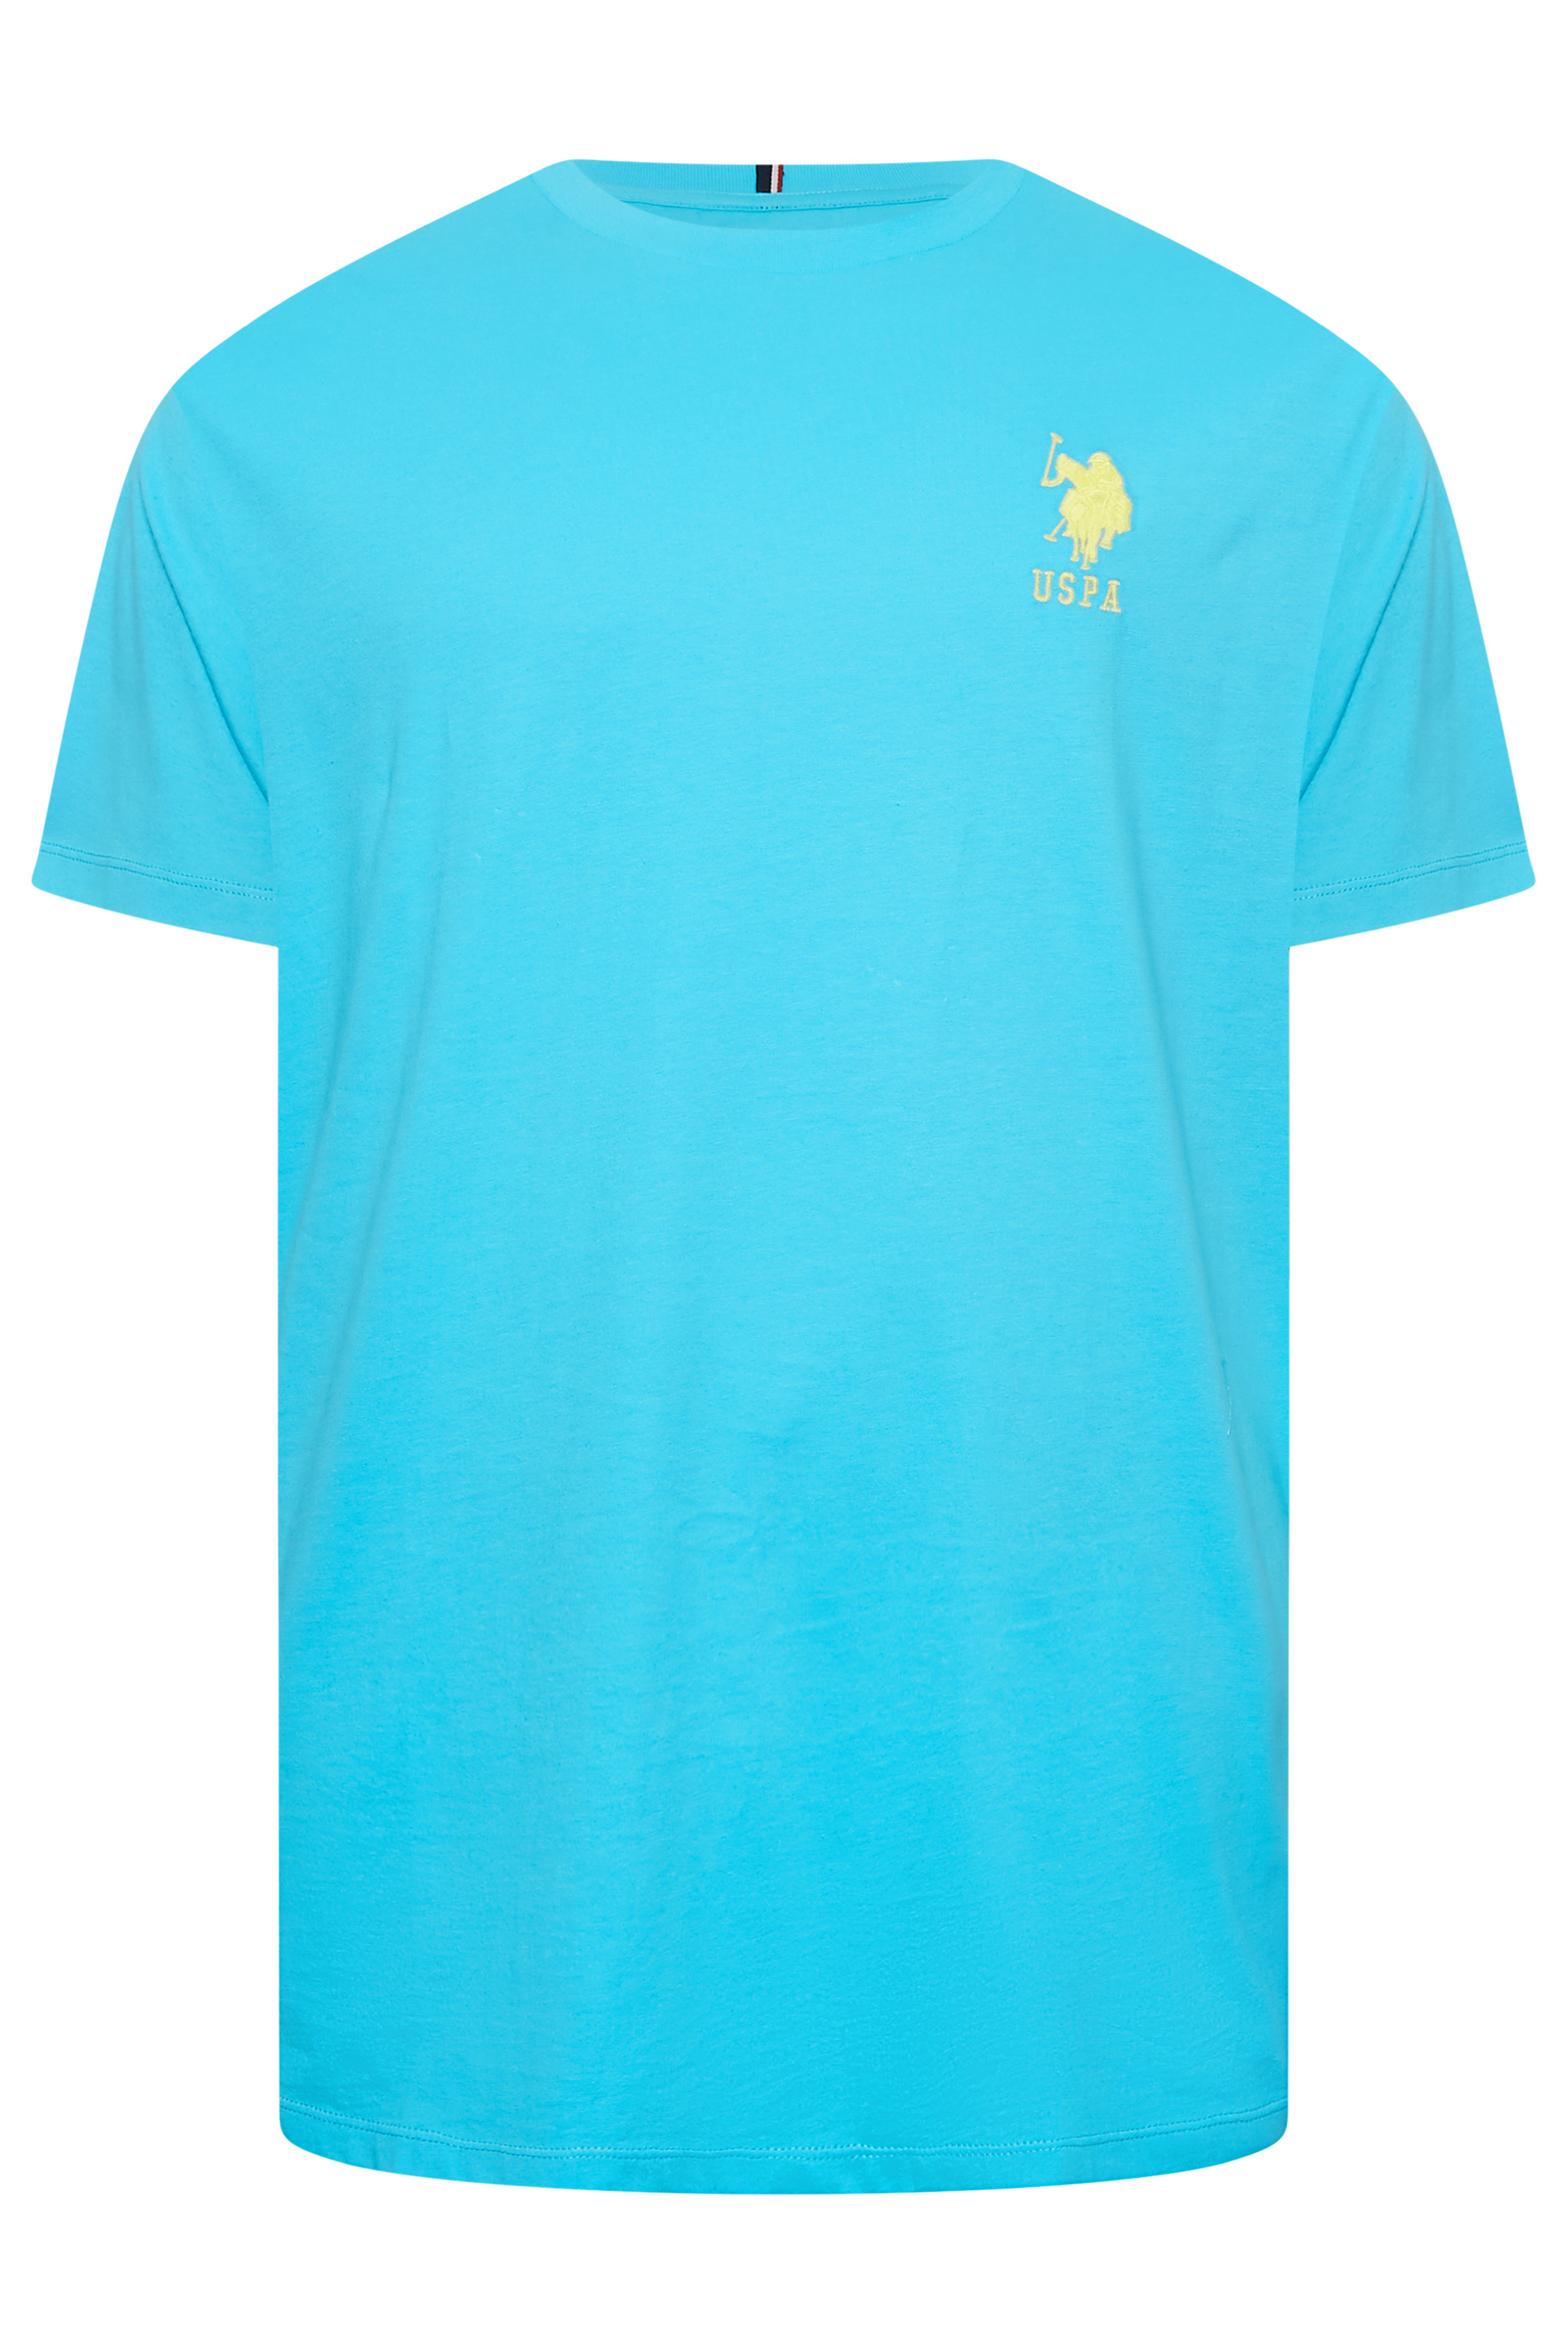 U.S. POLO ASSN. Big & Tall Light Blue Player 3 T-Shirt | BadRhino 2